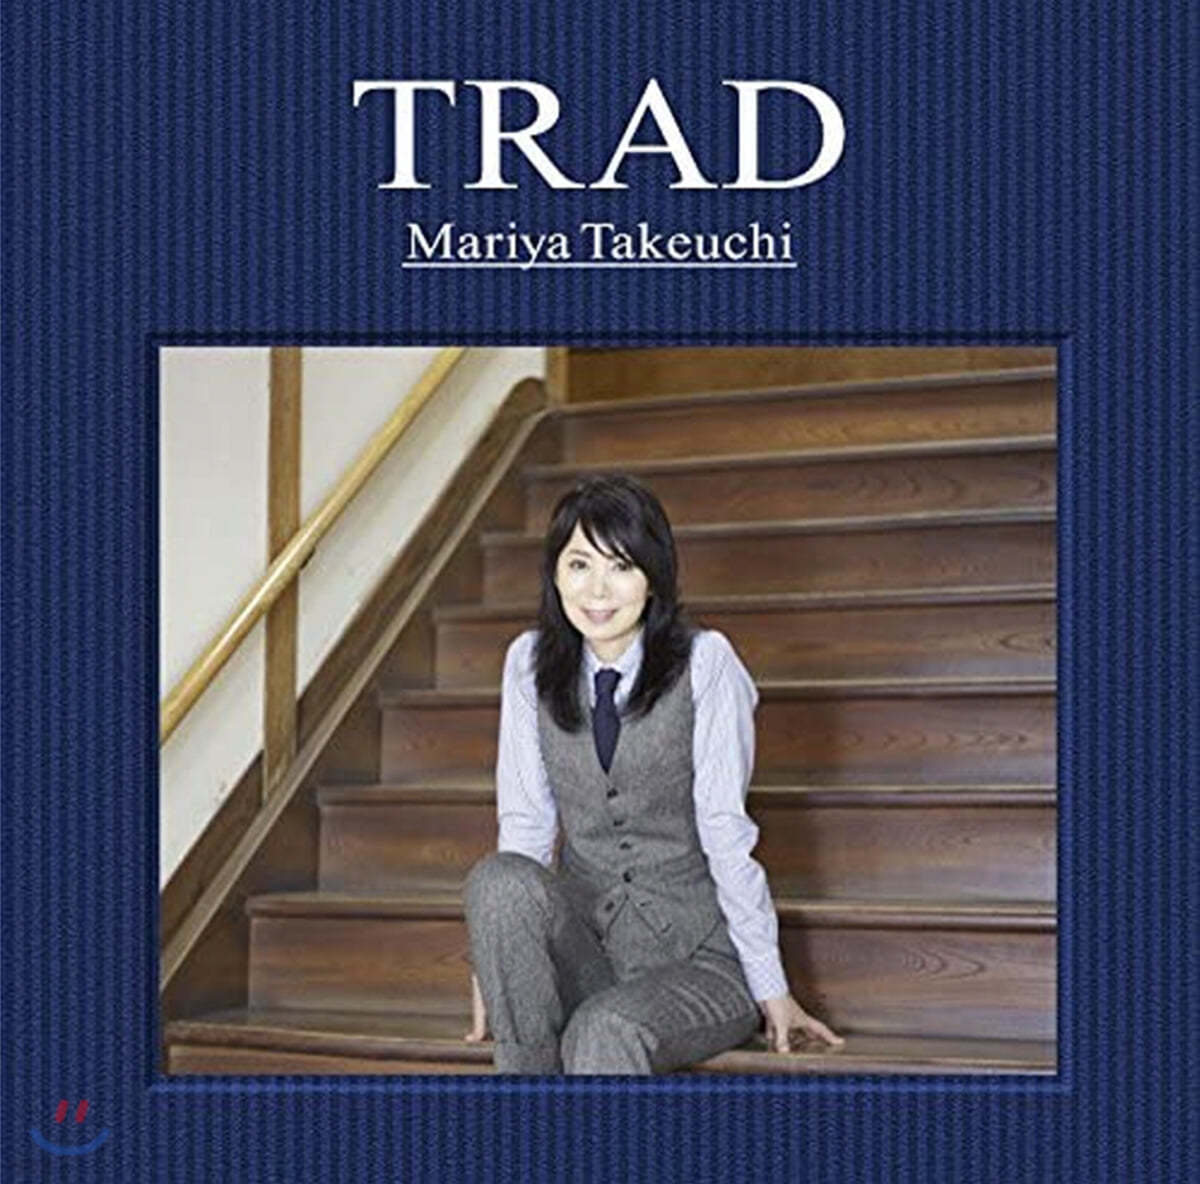 Takeuchi Mariya (타케우치 마리야) - Trad [2LP]